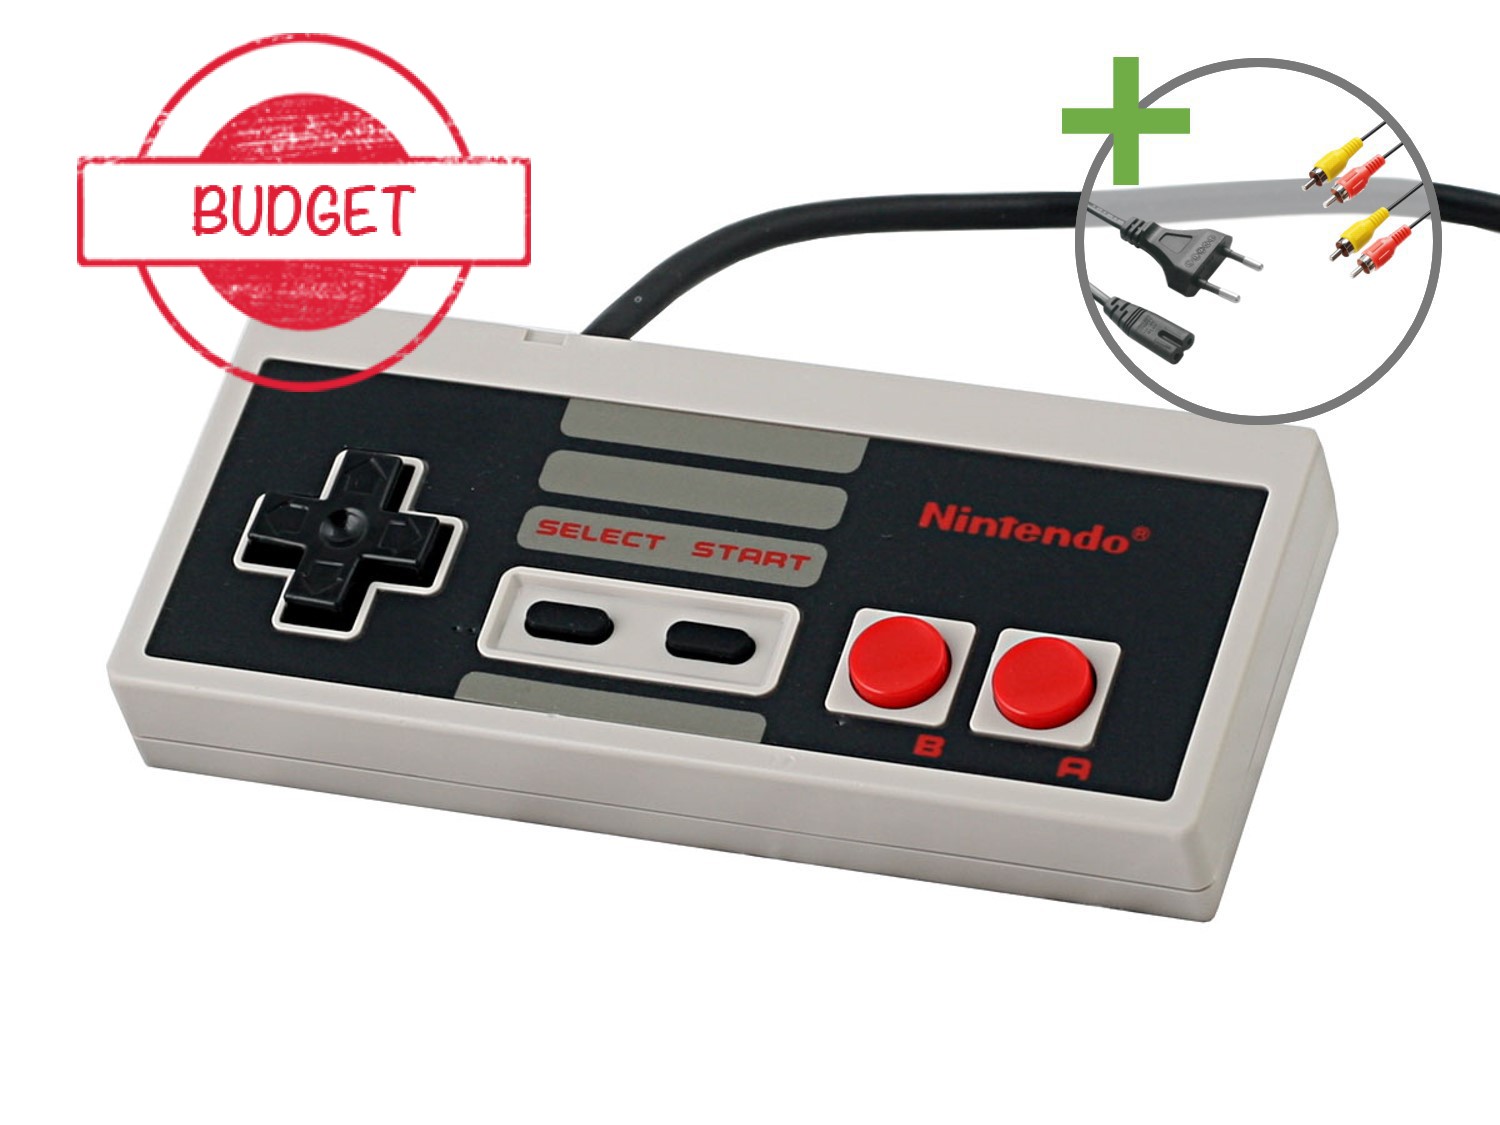 Nintendo NES Starter Pack - Control Deck Edition - Budget - Nintendo NES Hardware - 4